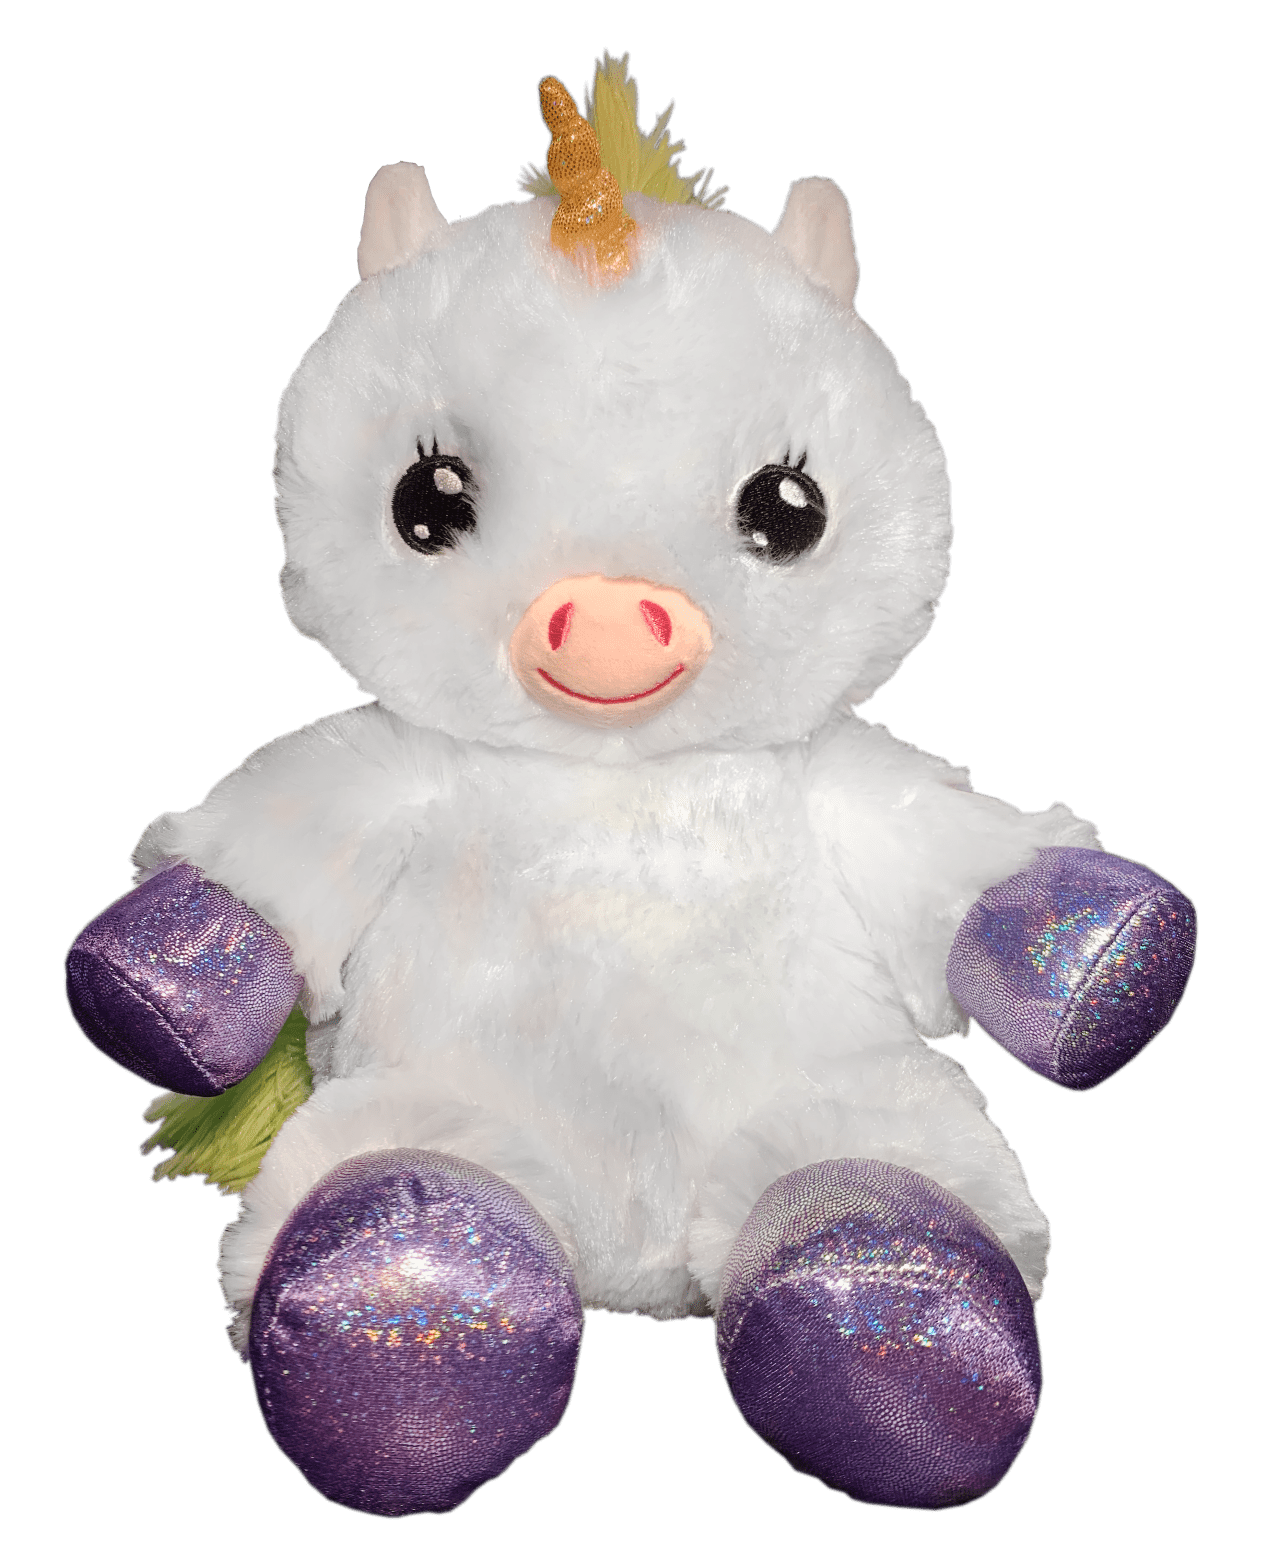 Sleeping crochet unicorn plush lavender snout